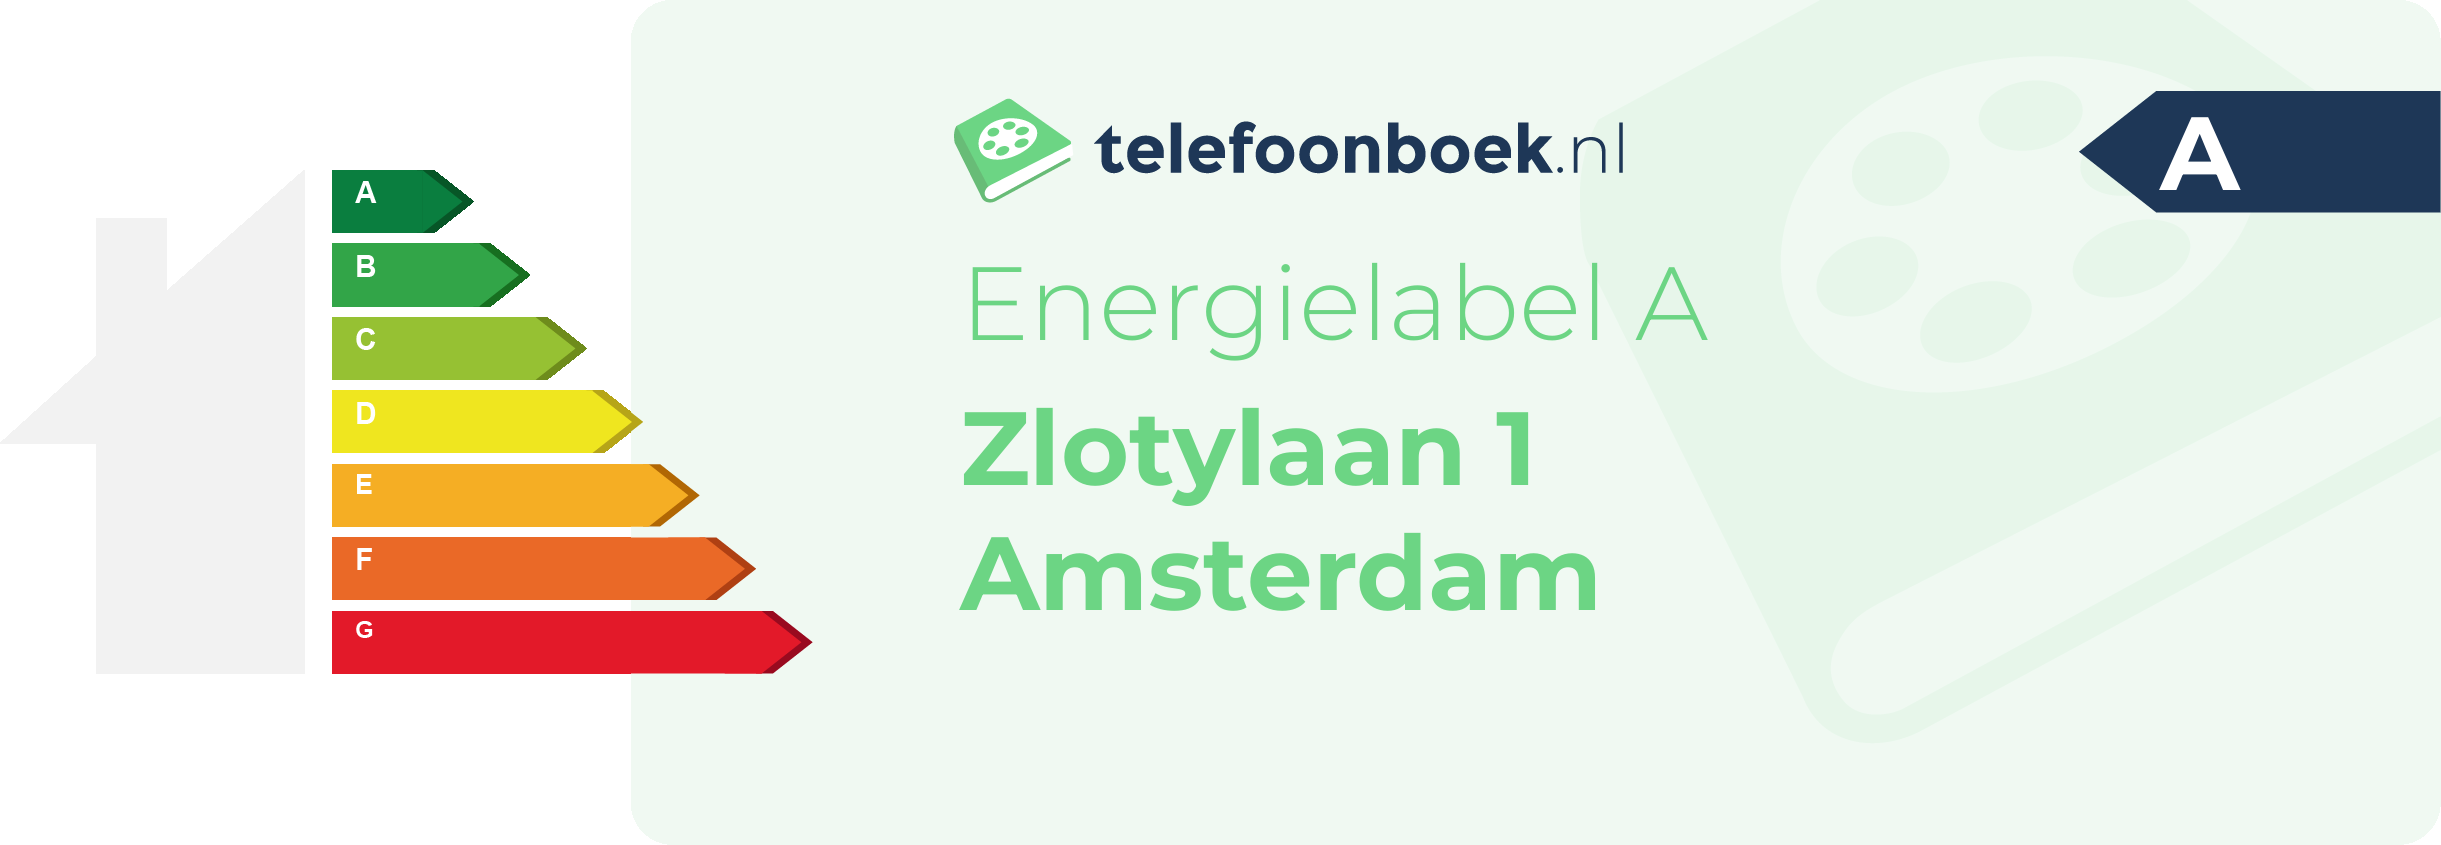 Energielabel Zlotylaan 1 Amsterdam